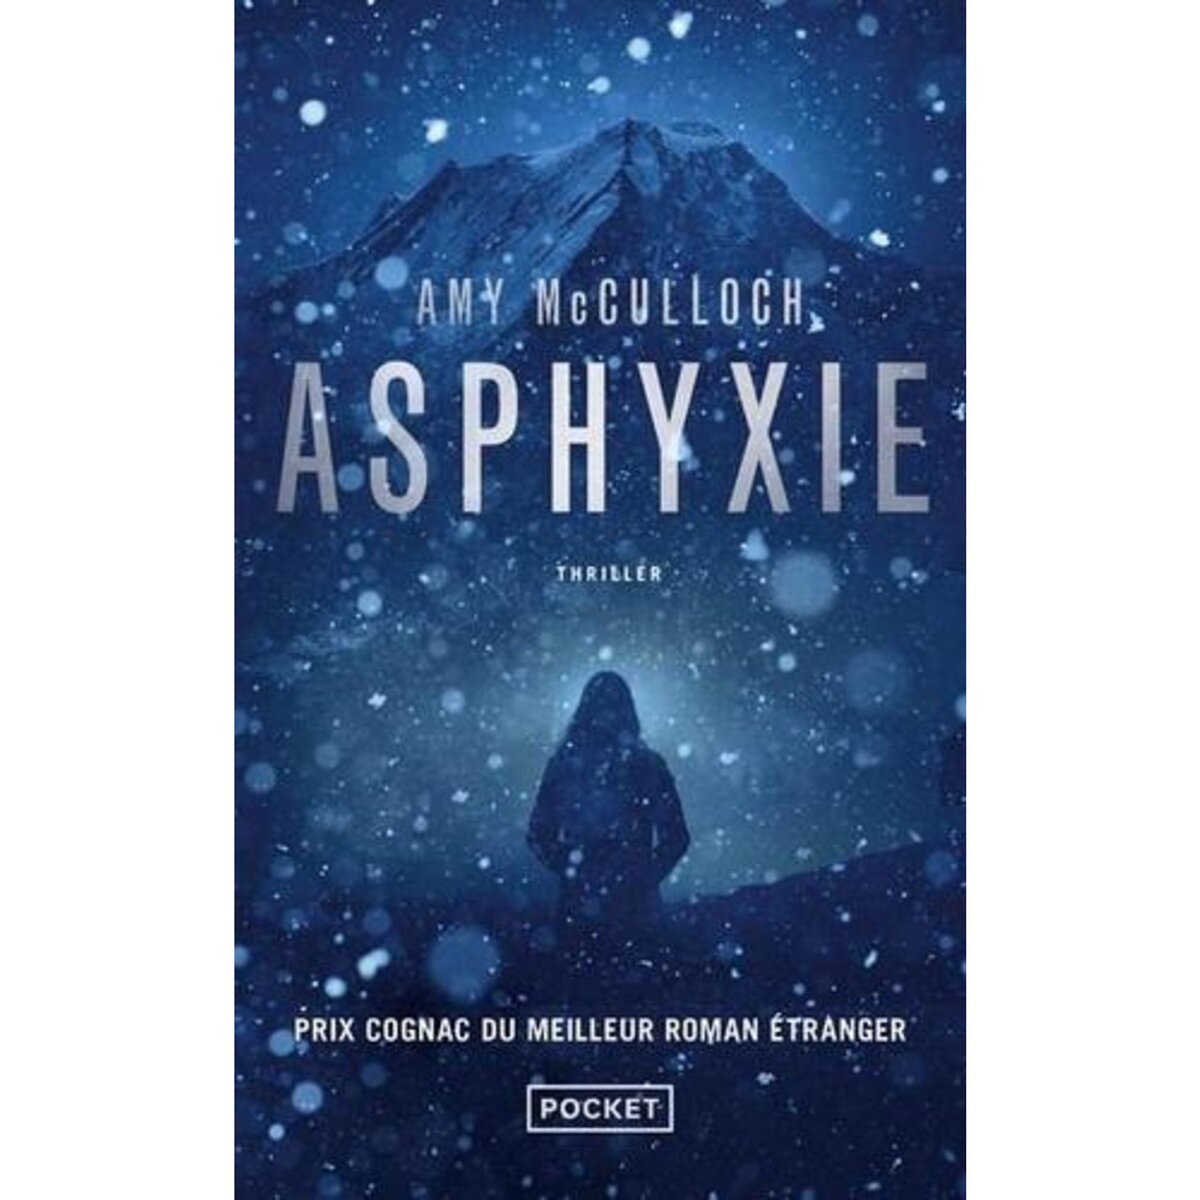  ASPHYXIE, McCulloch Amy